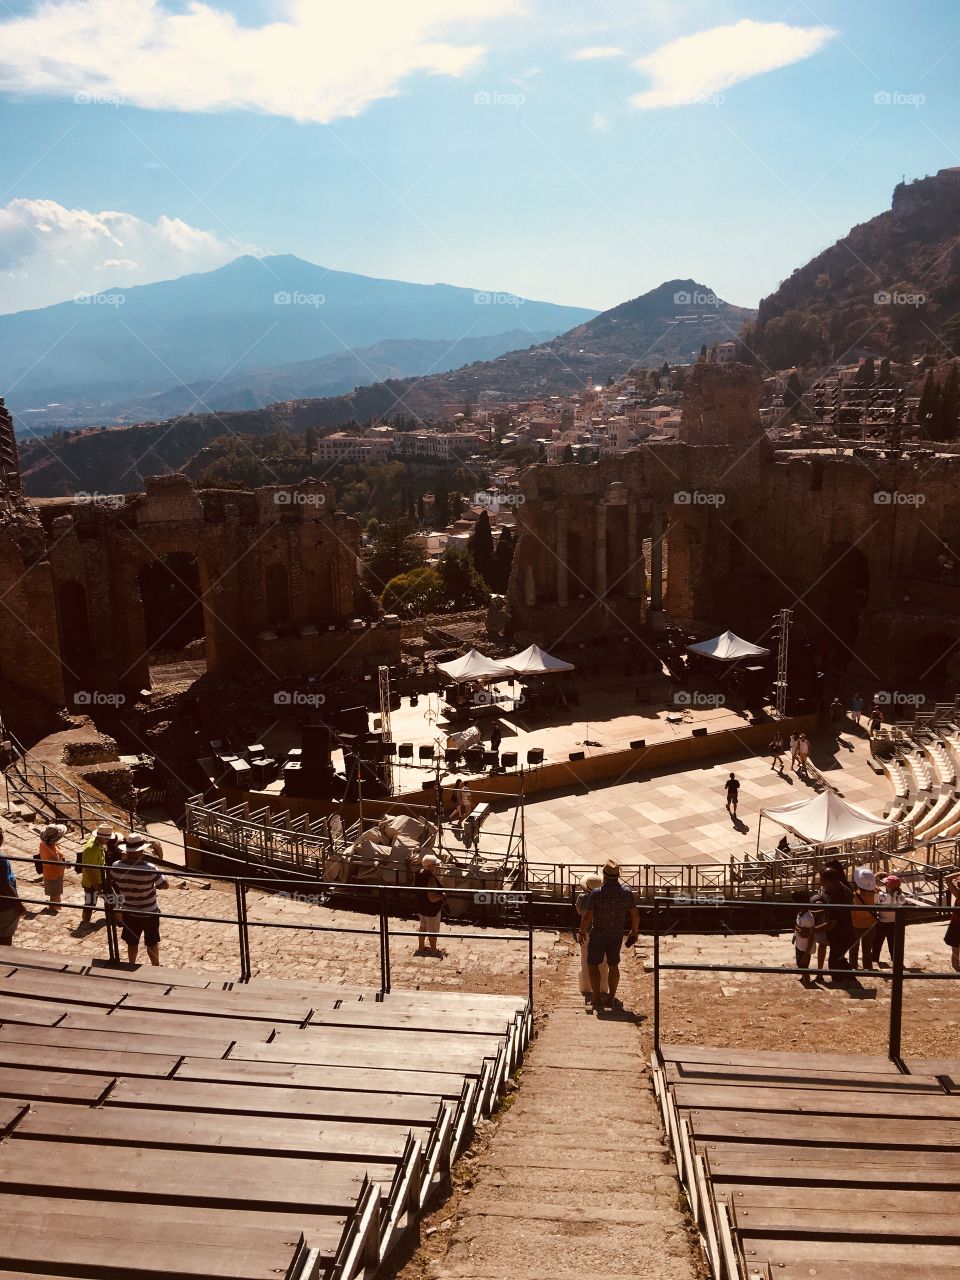 Greek theater in Taormina Sicily 